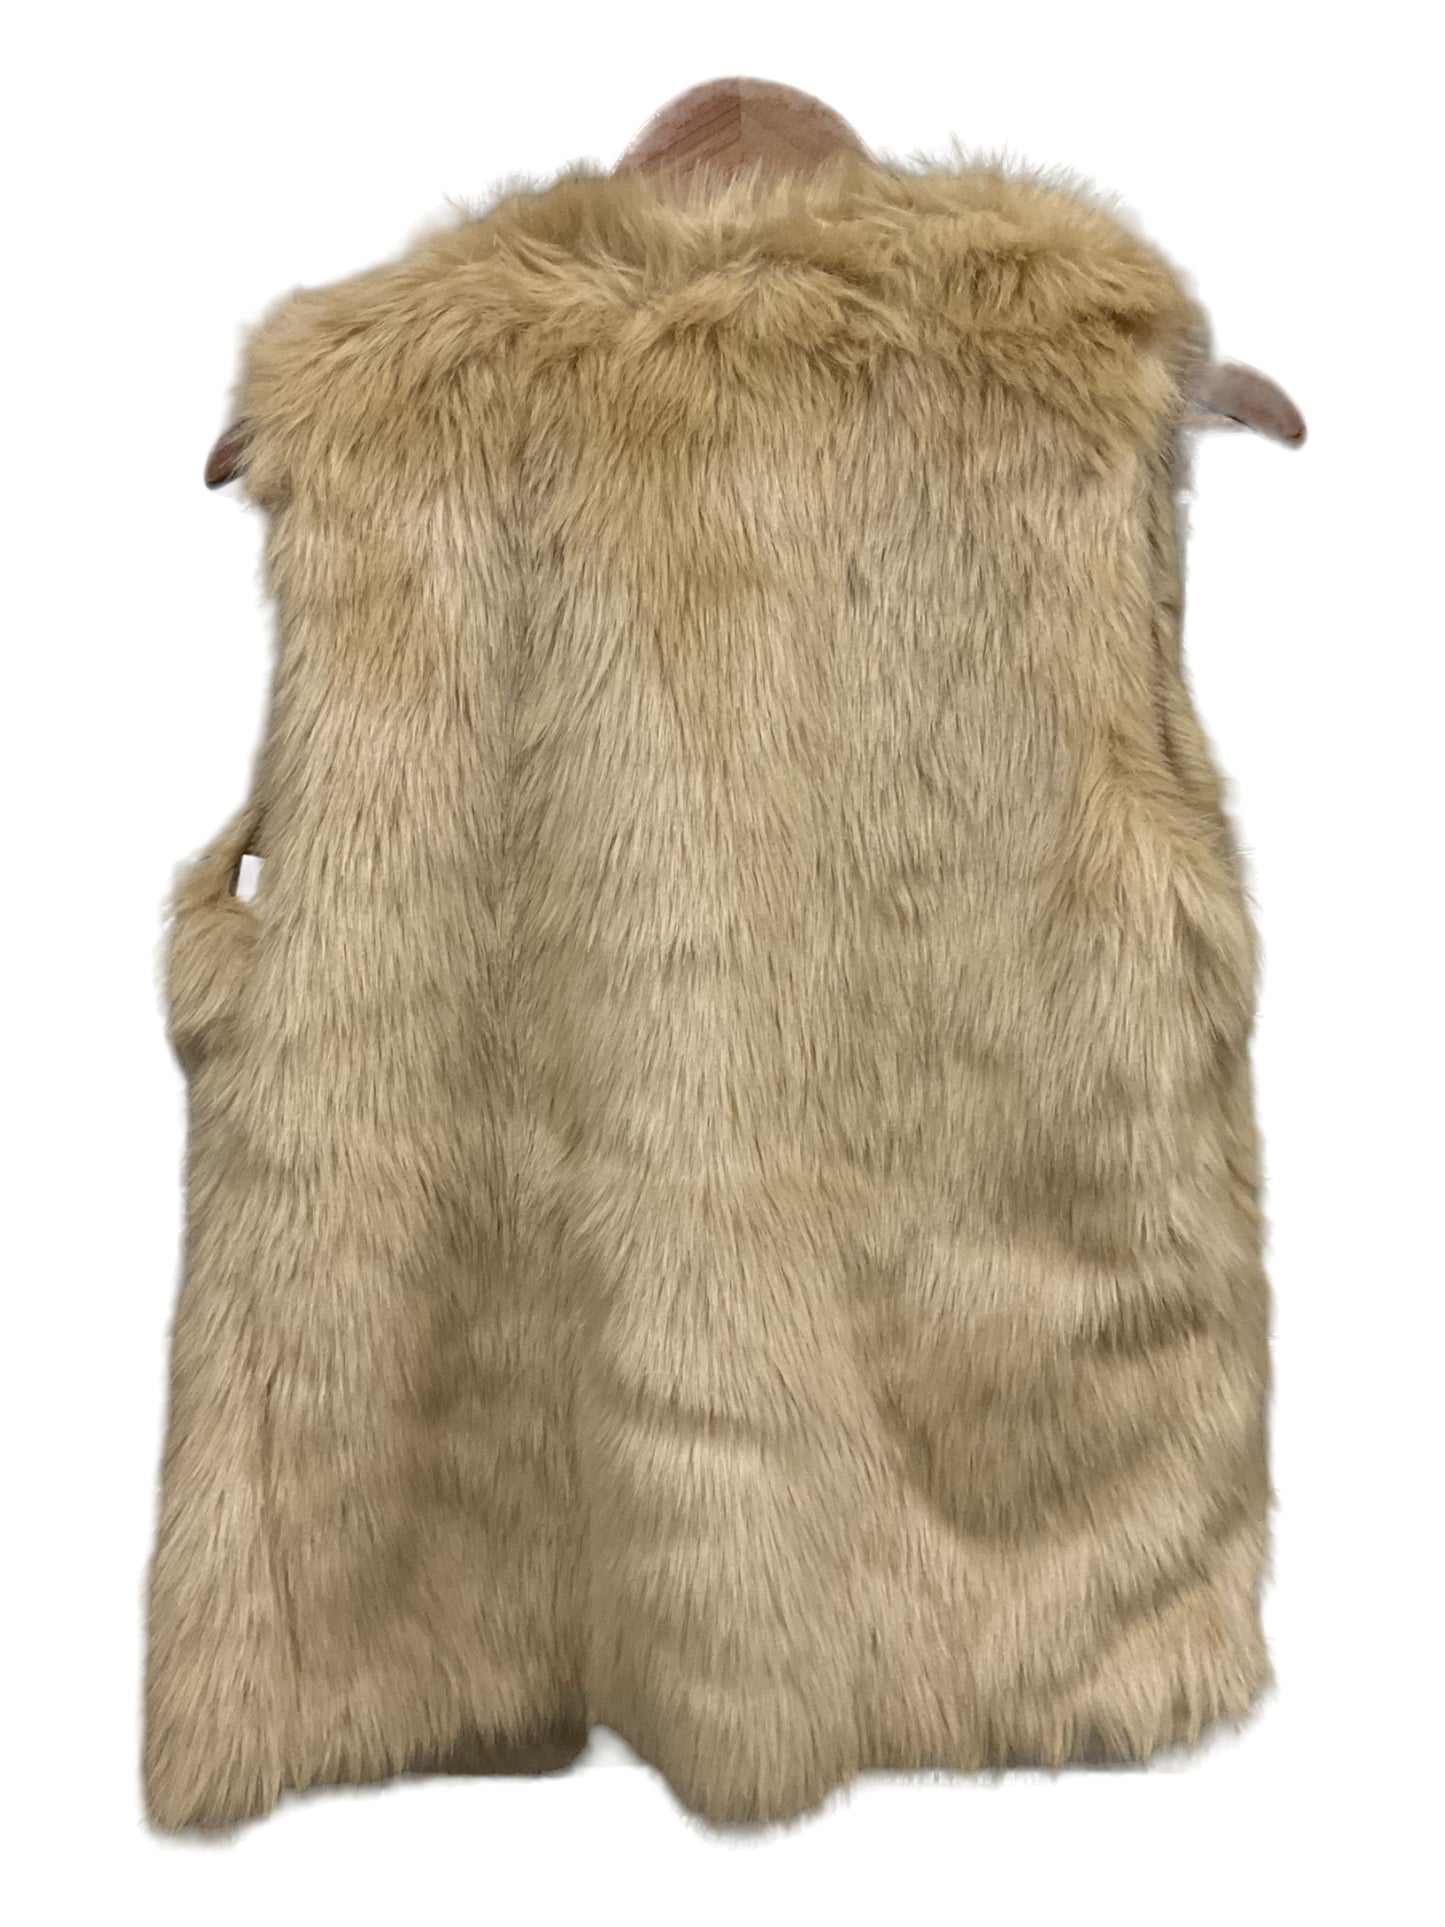 Vest Faux Fur & Sherpa By Clothes Mentor  Size: M